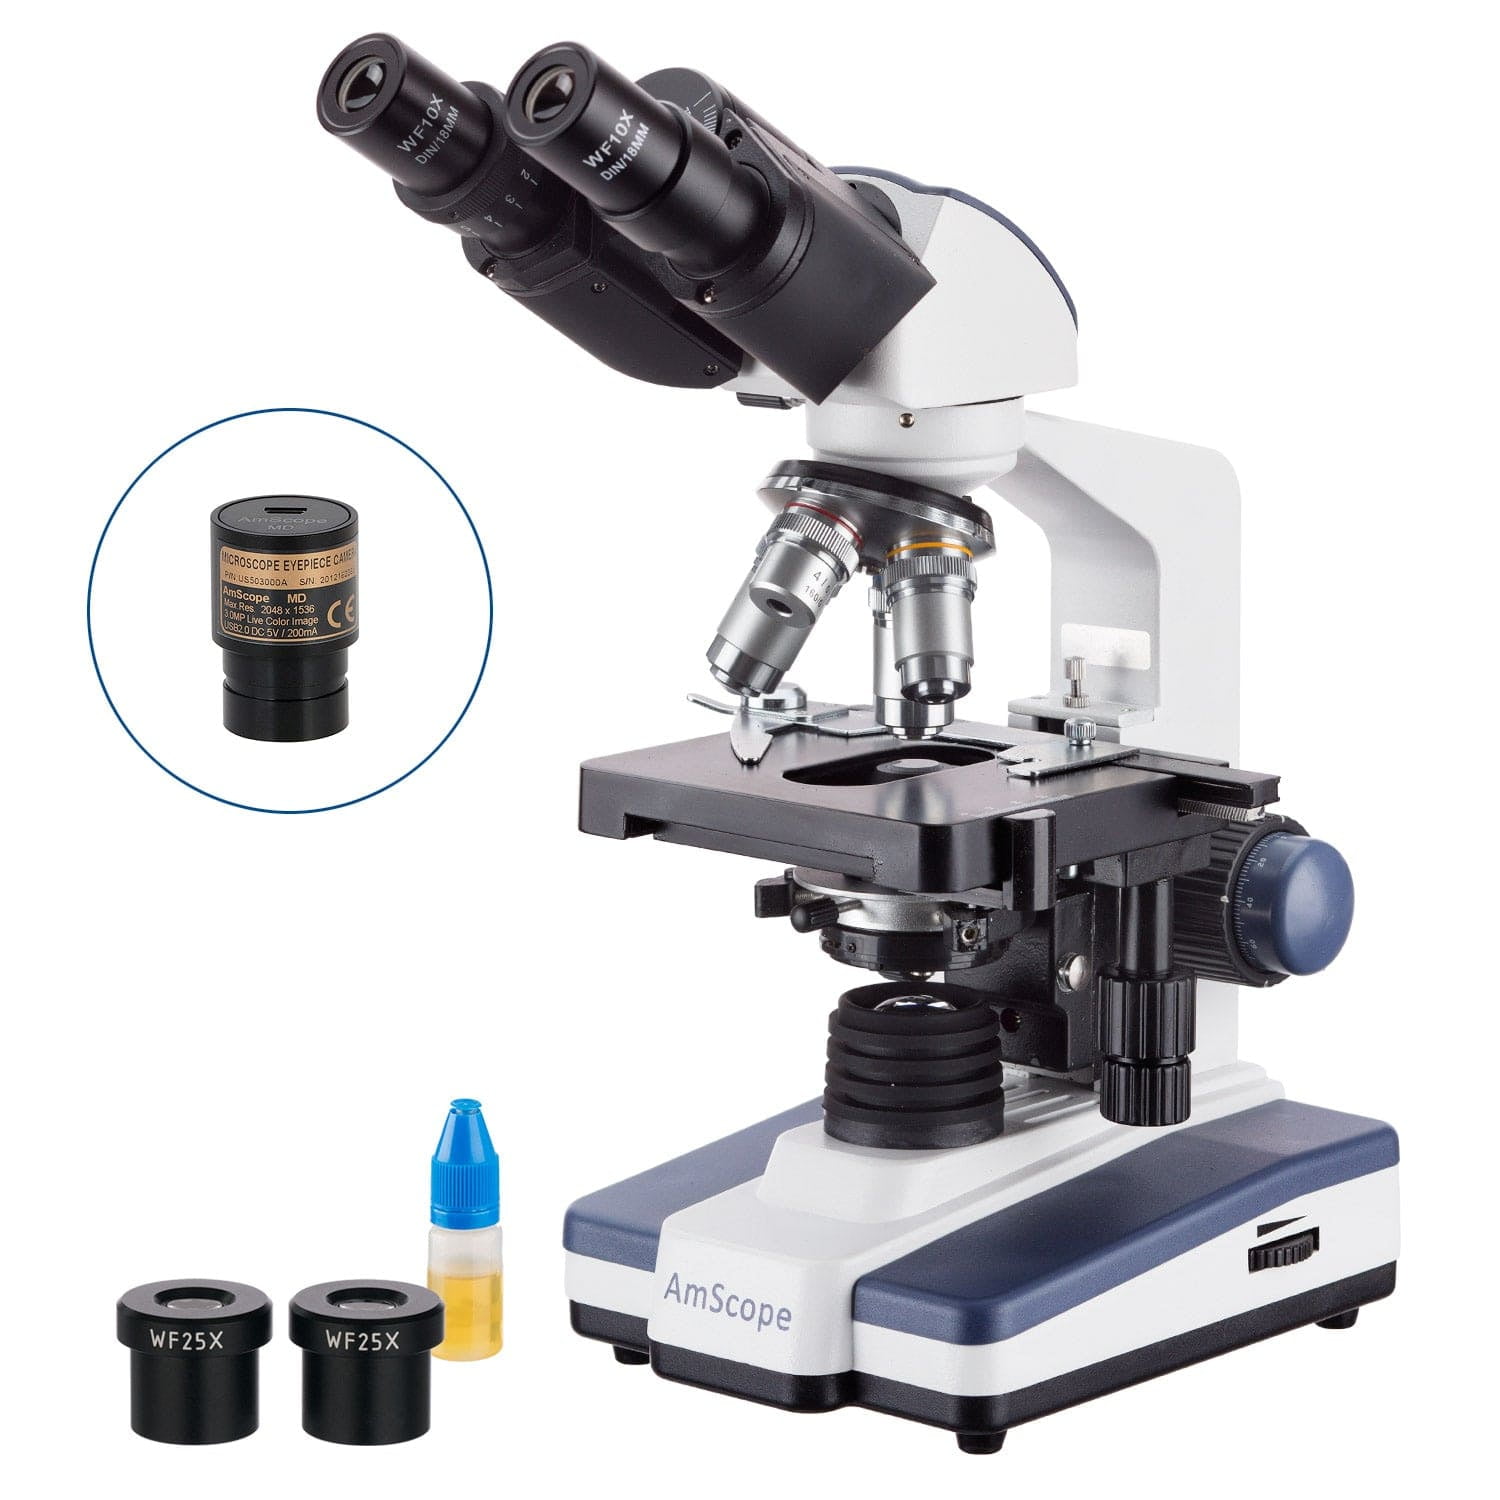 U.S. regulations High Precision LED Lights 100-240V LED Industrial Microscope HD Microscope Camera Digital for Observe